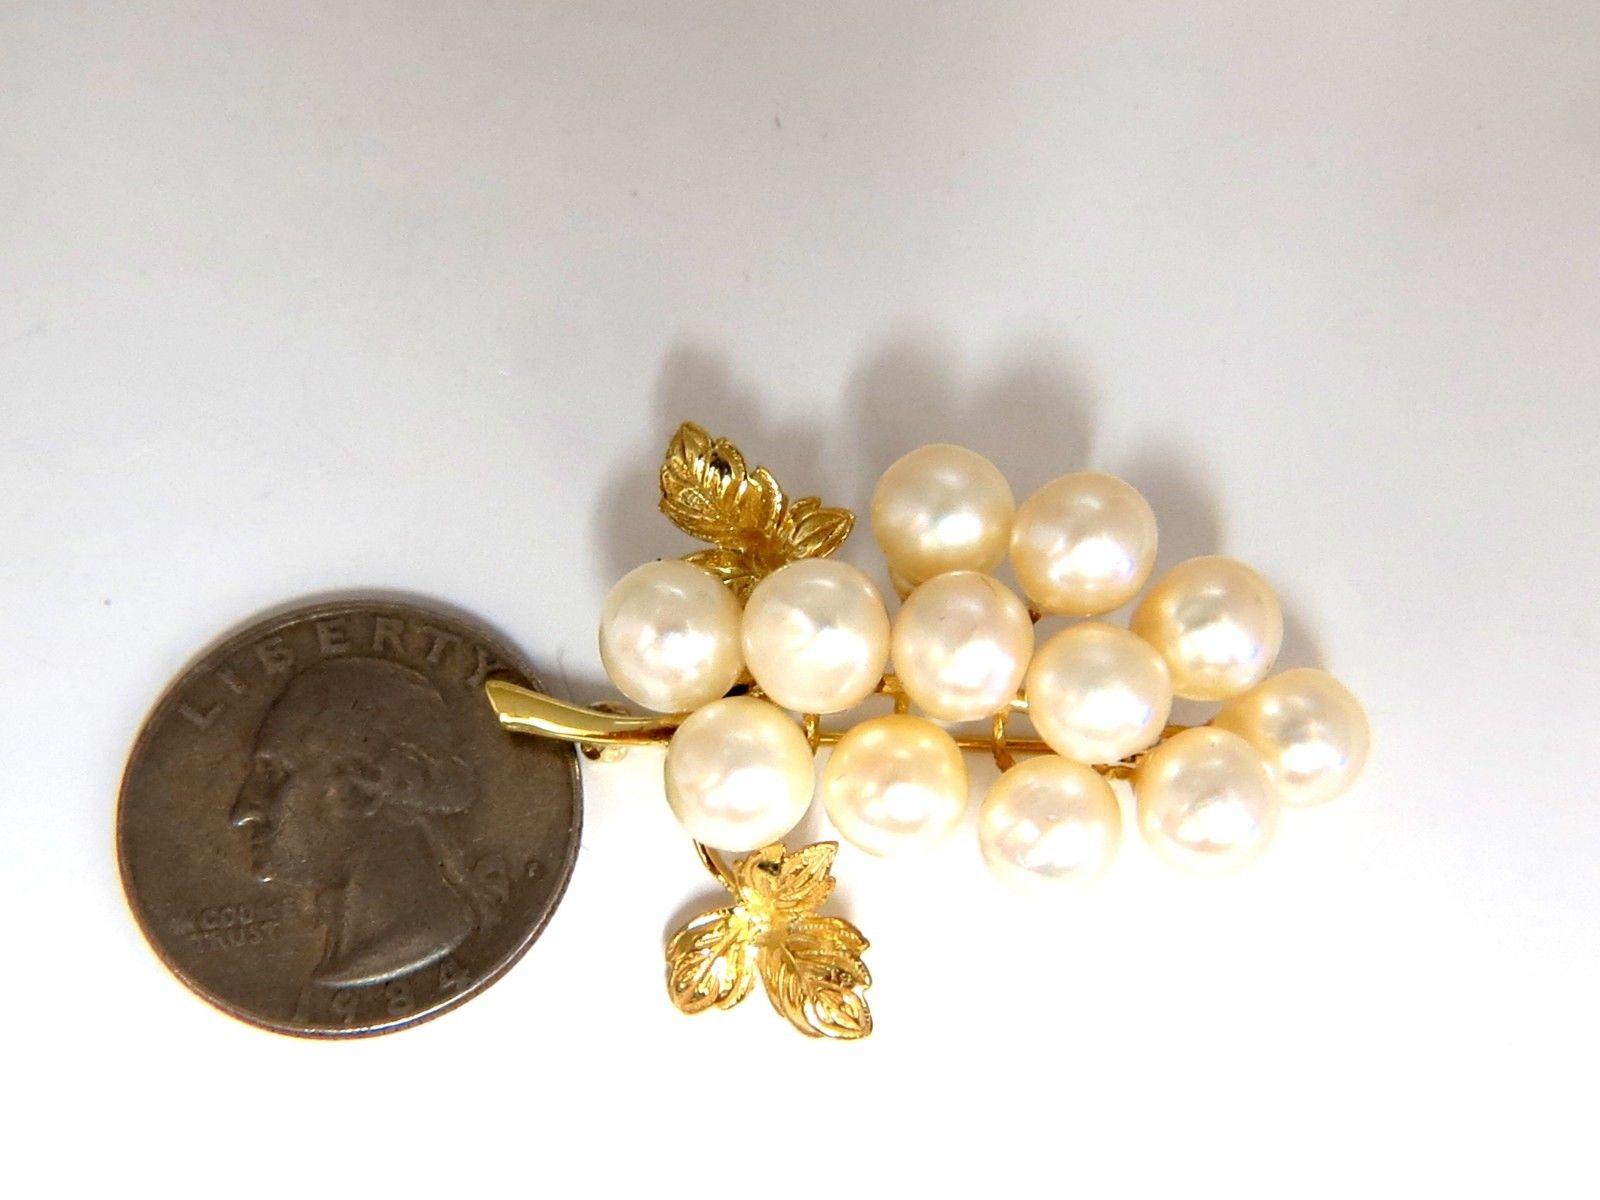 Vintage Pearl Pin

7mm Natural Akoya Pearls (12)

14kt yellow gold

10 grams

1.8 x 1.3 inch